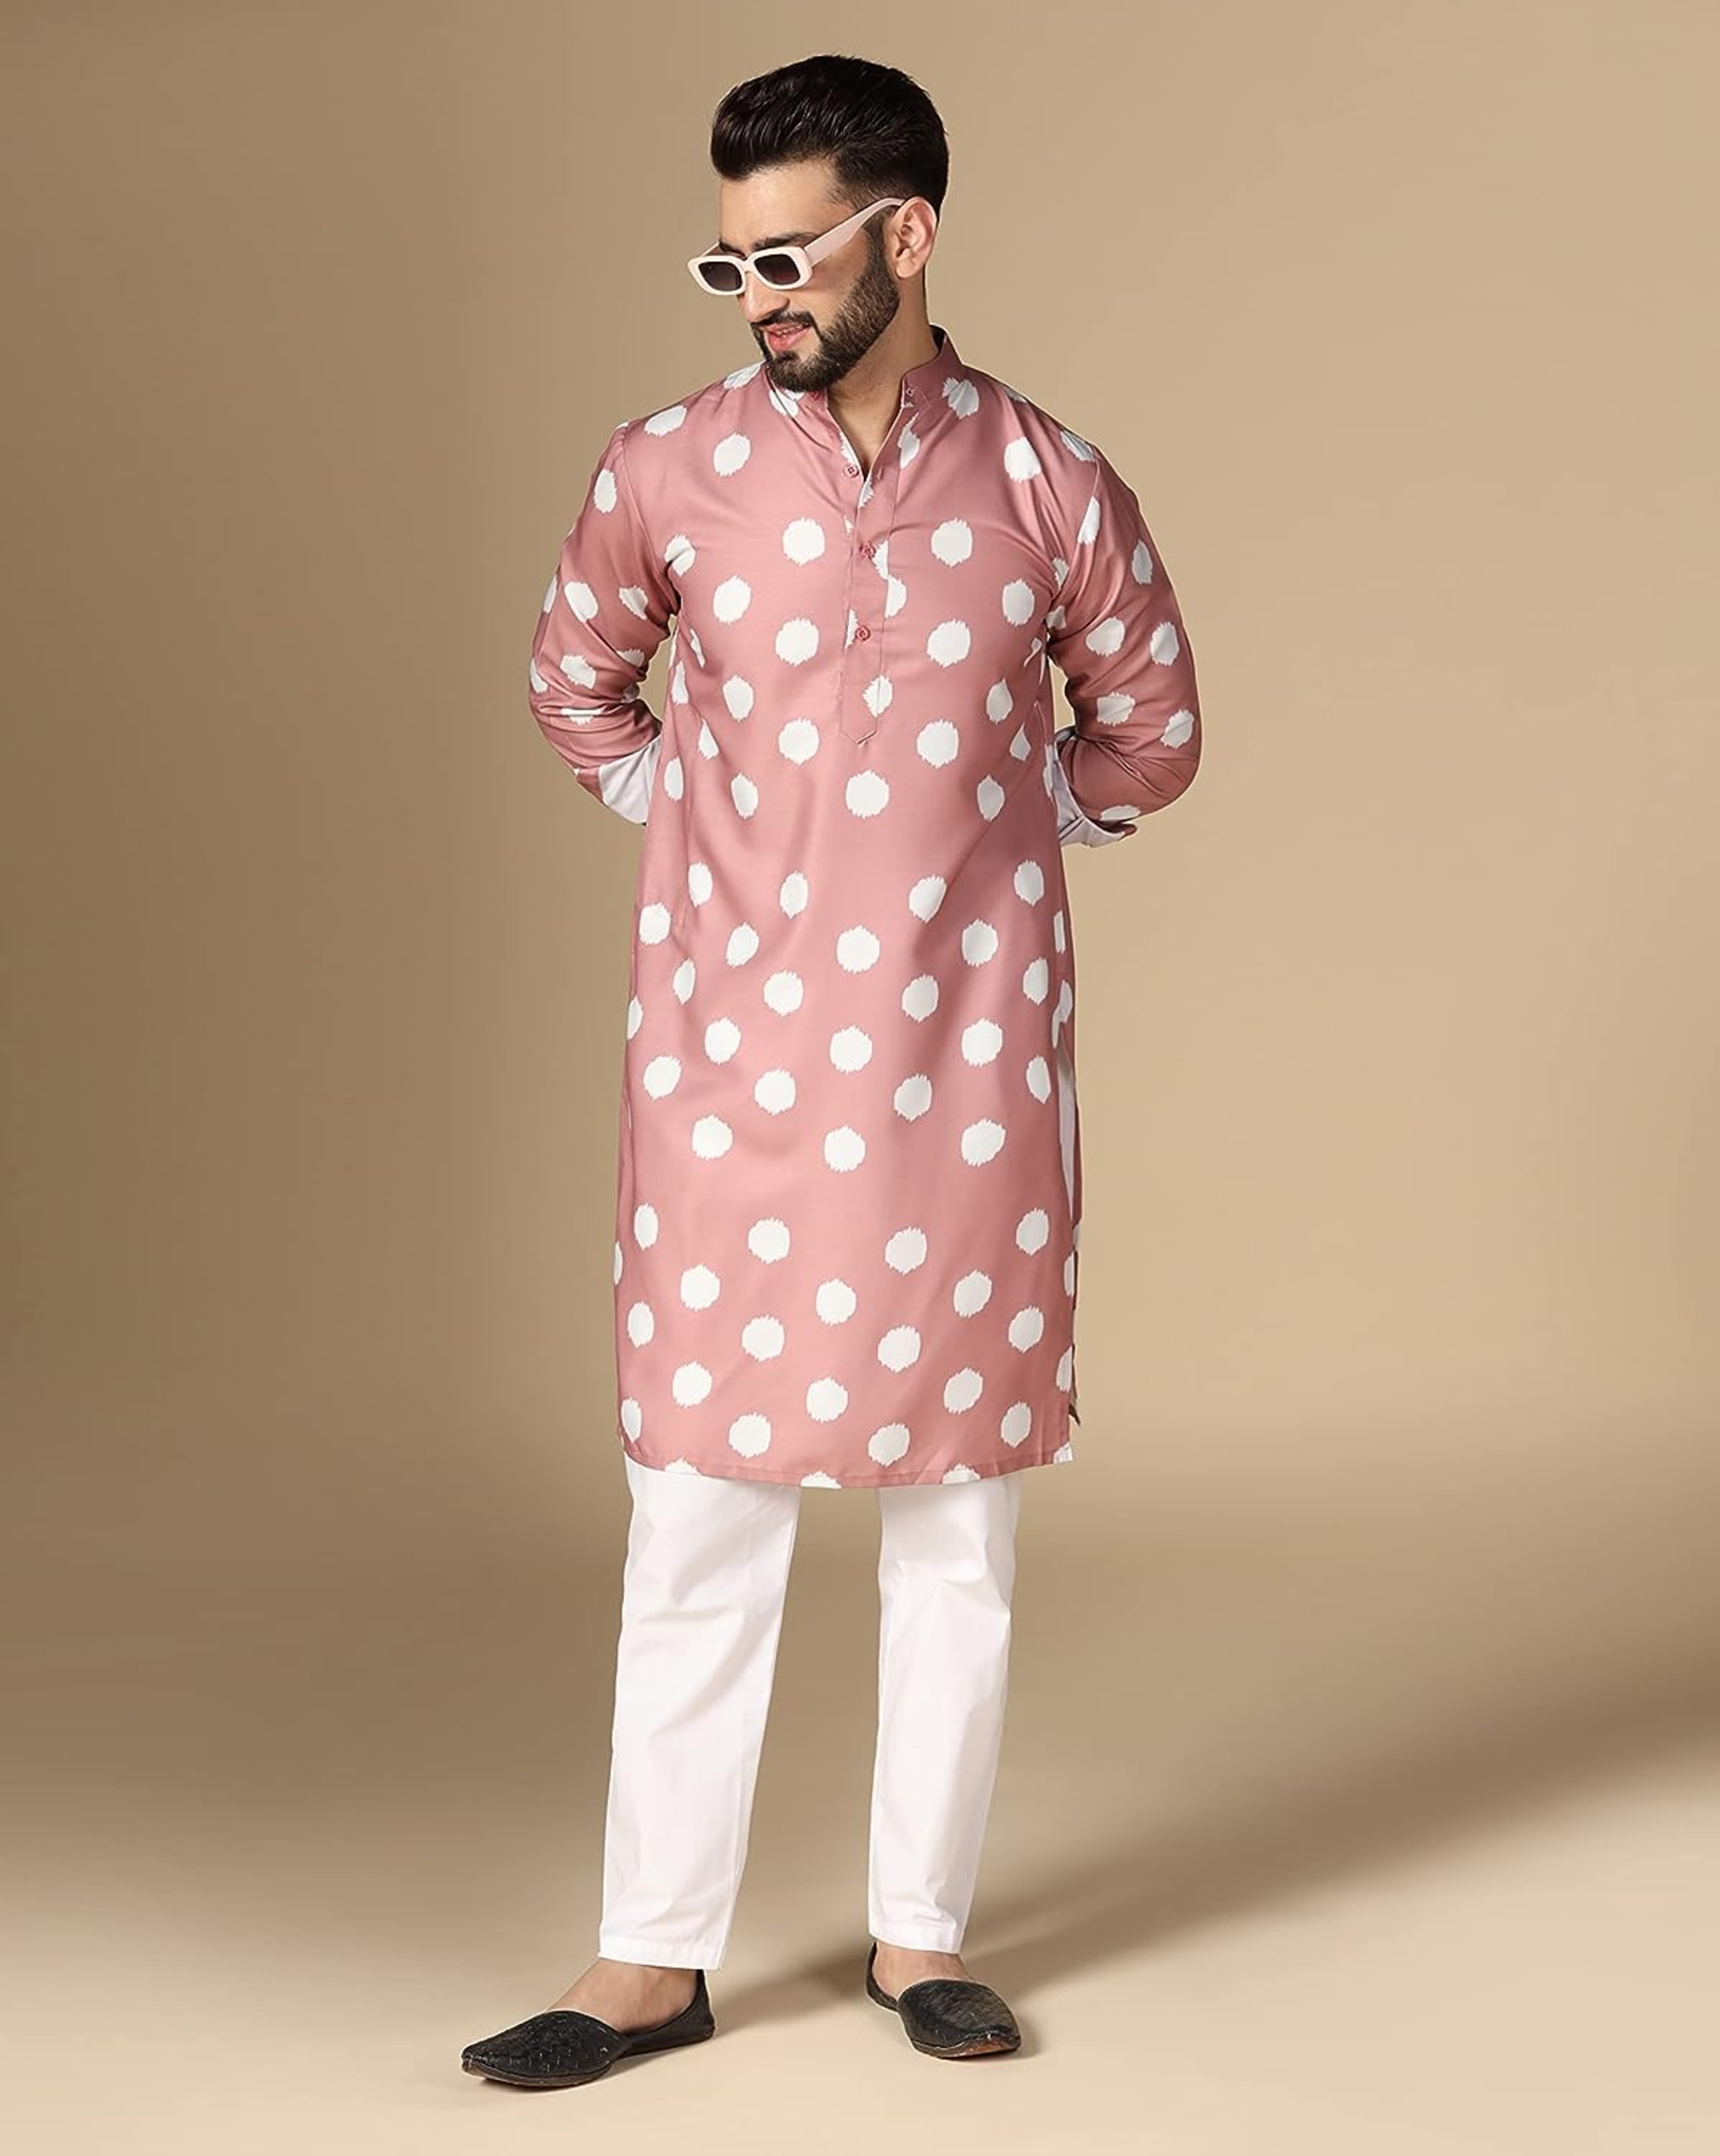  Diwali Outfit Ideas